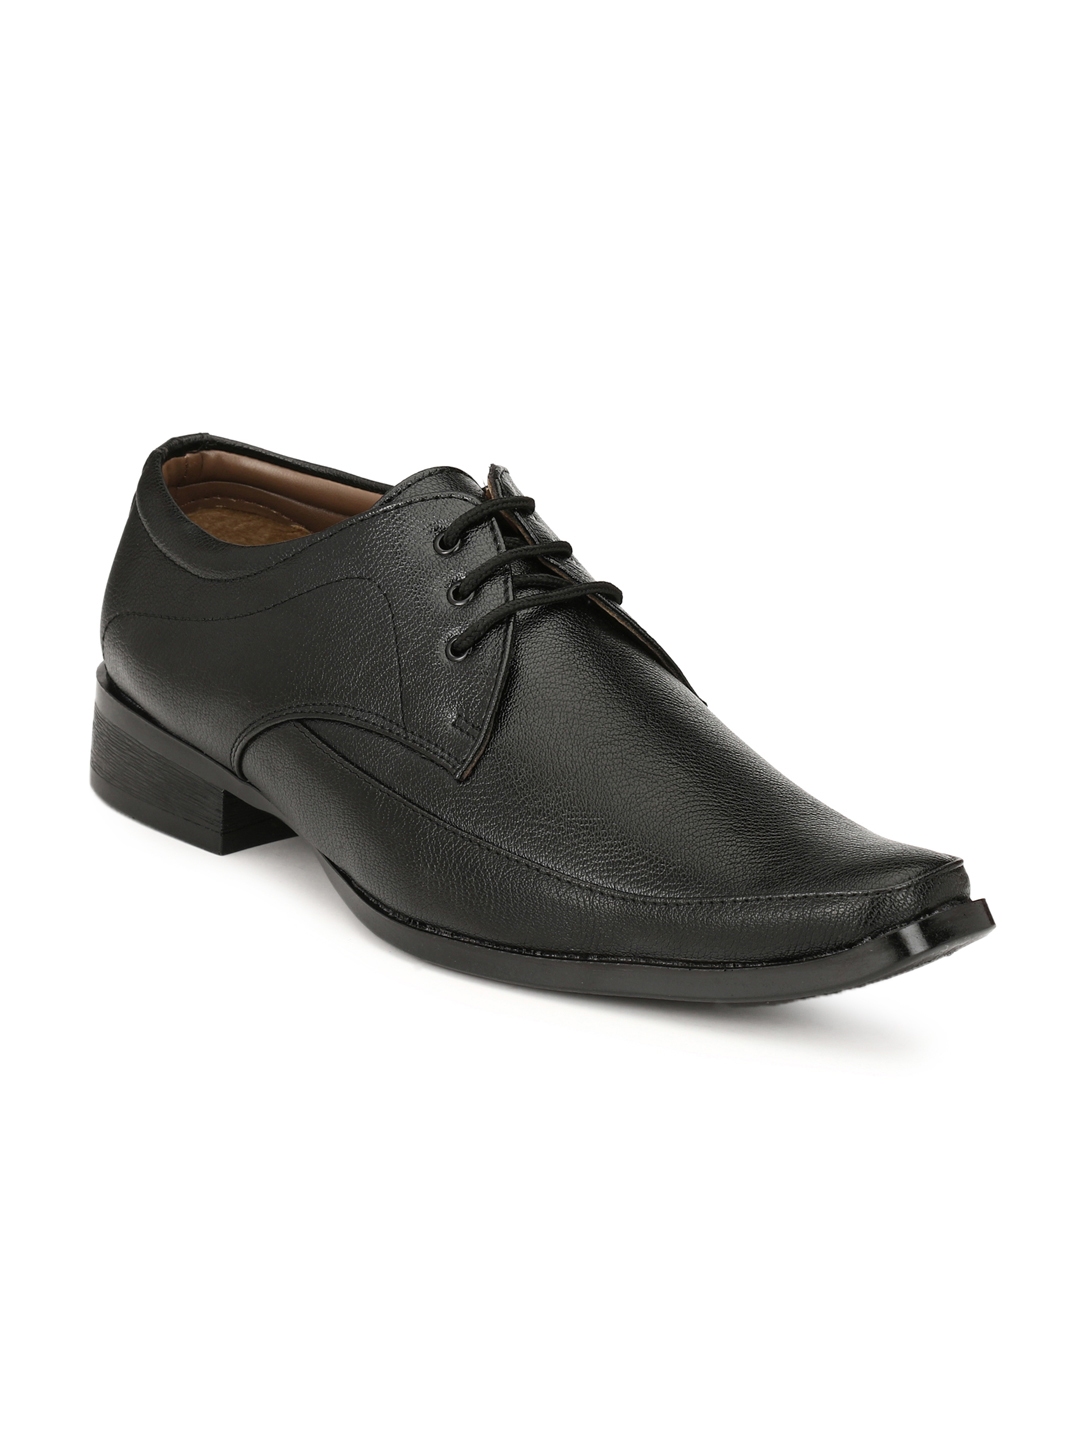 Buy Sir Corbett Black Formal Shoes - Formal Shoes for Men 2031776 | Myntra